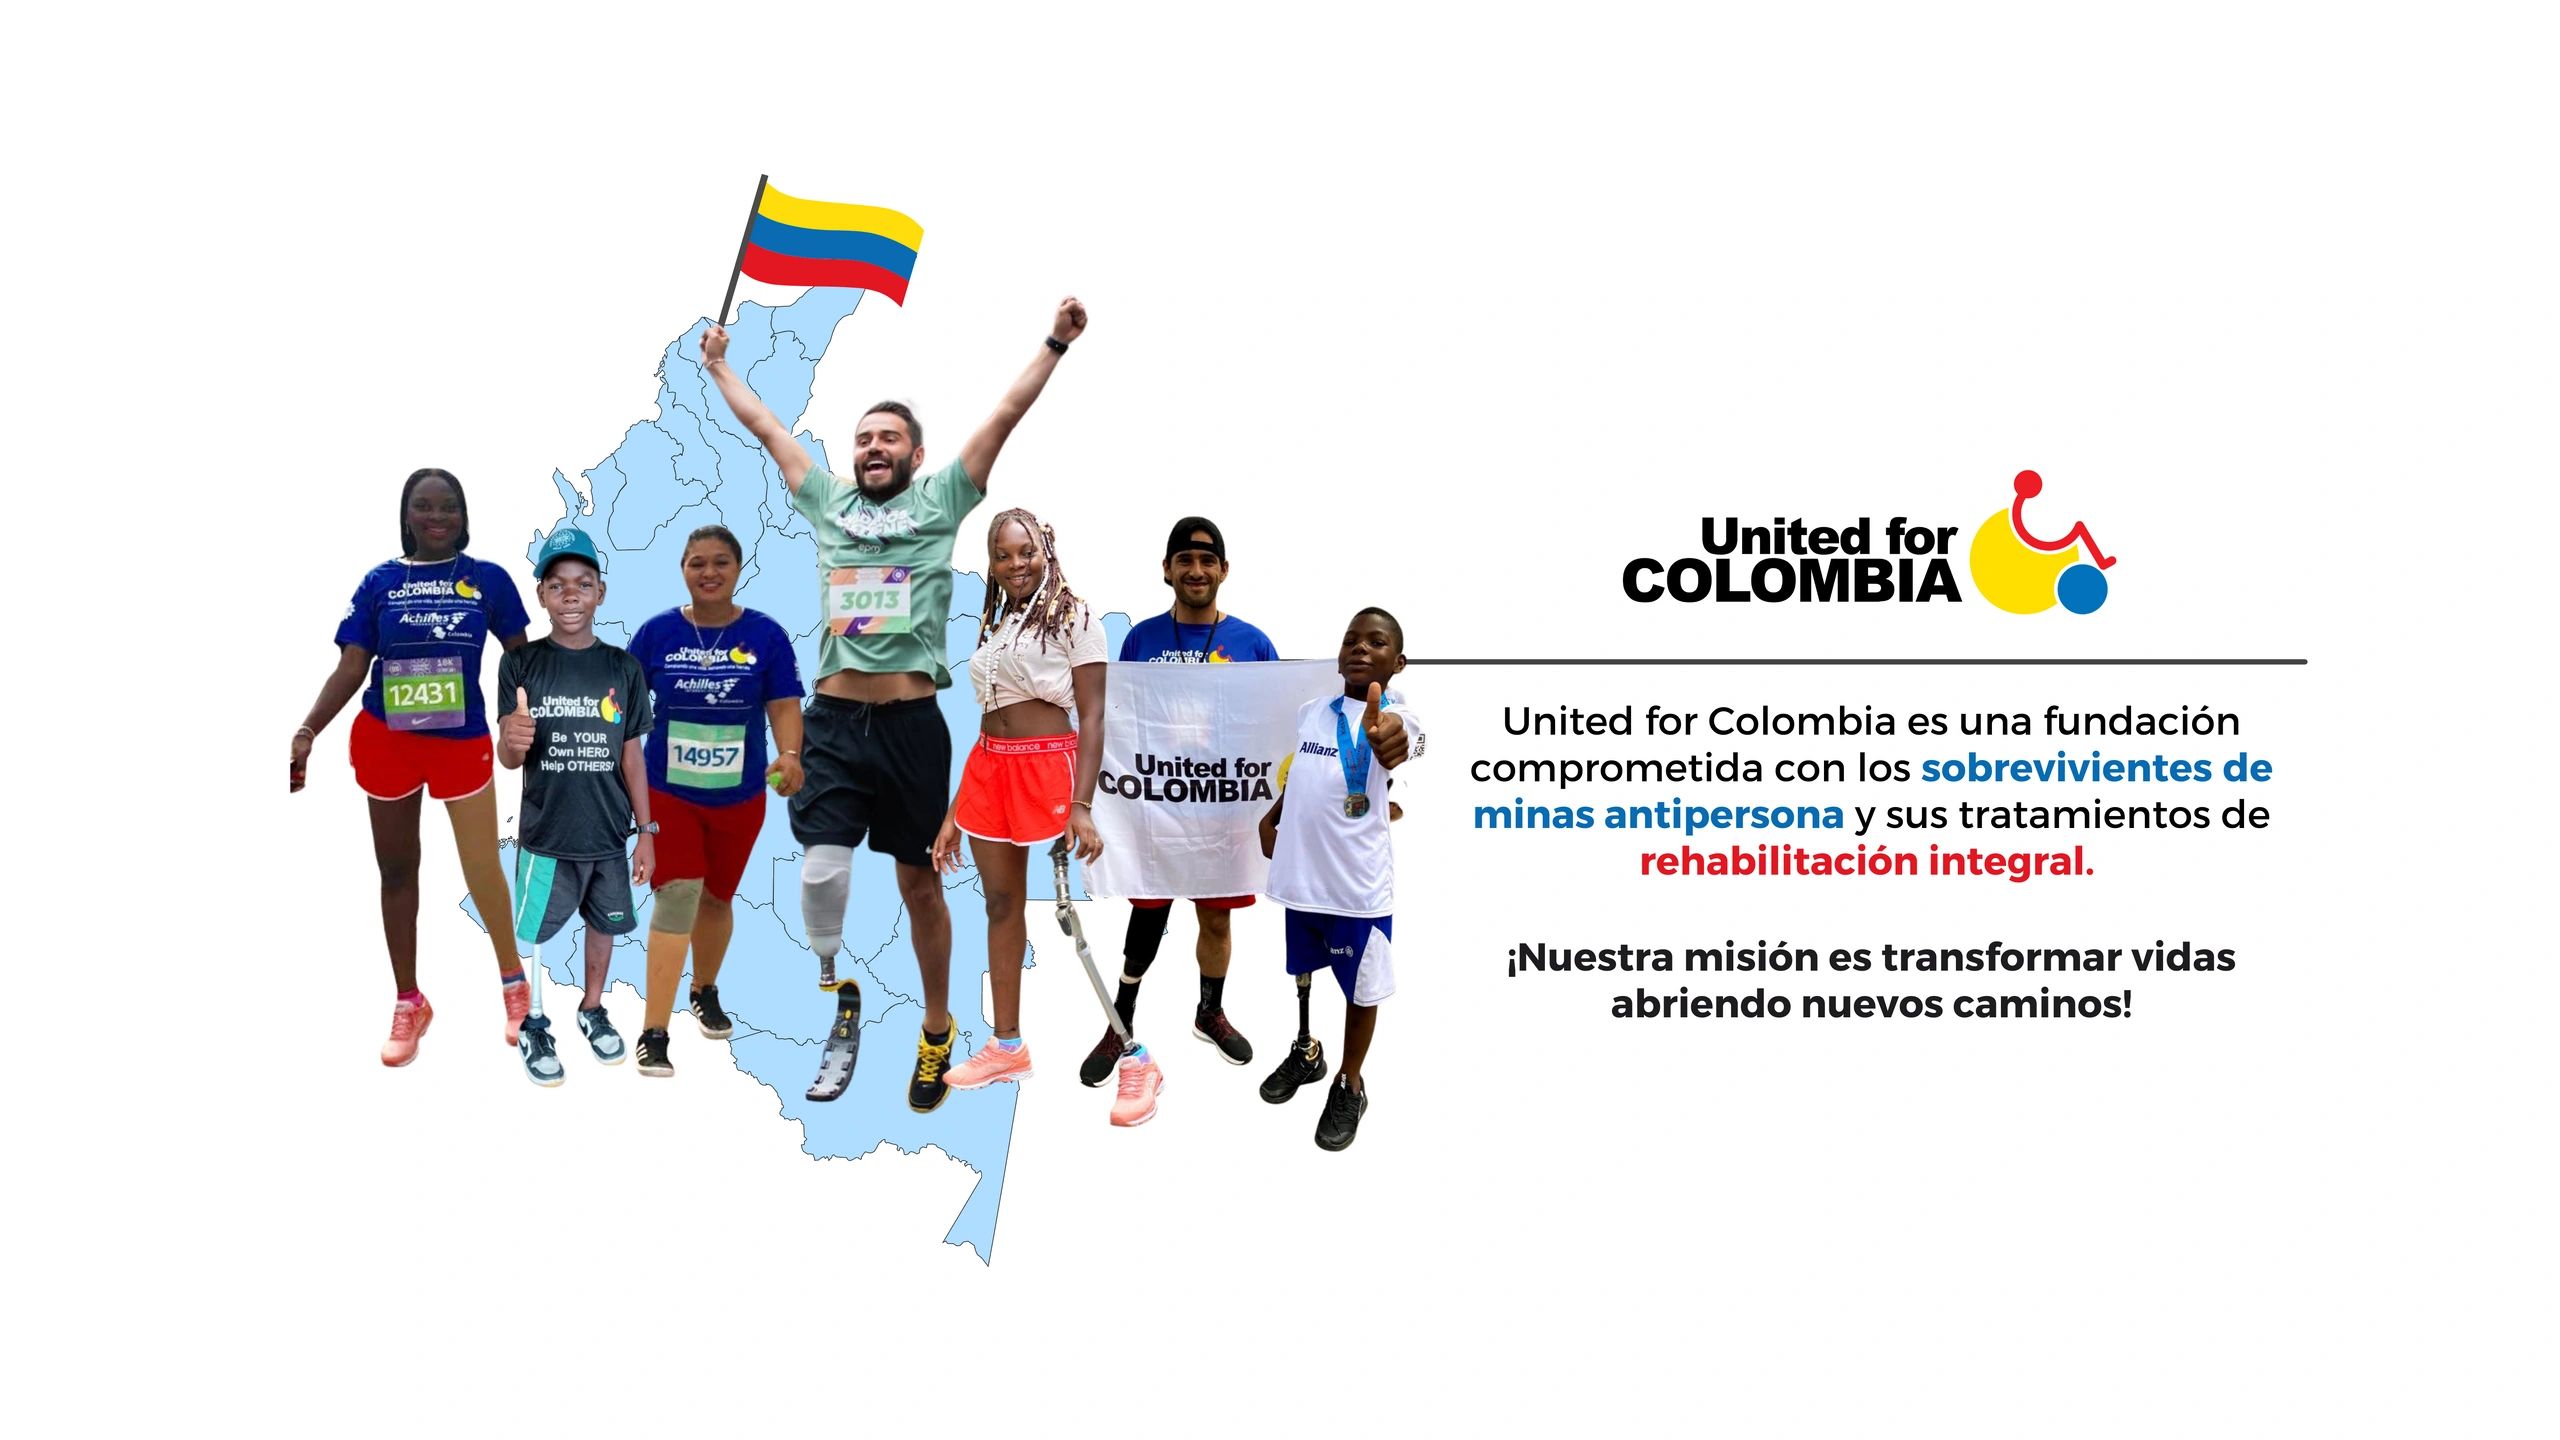 (c) Unitedforcolombia.org